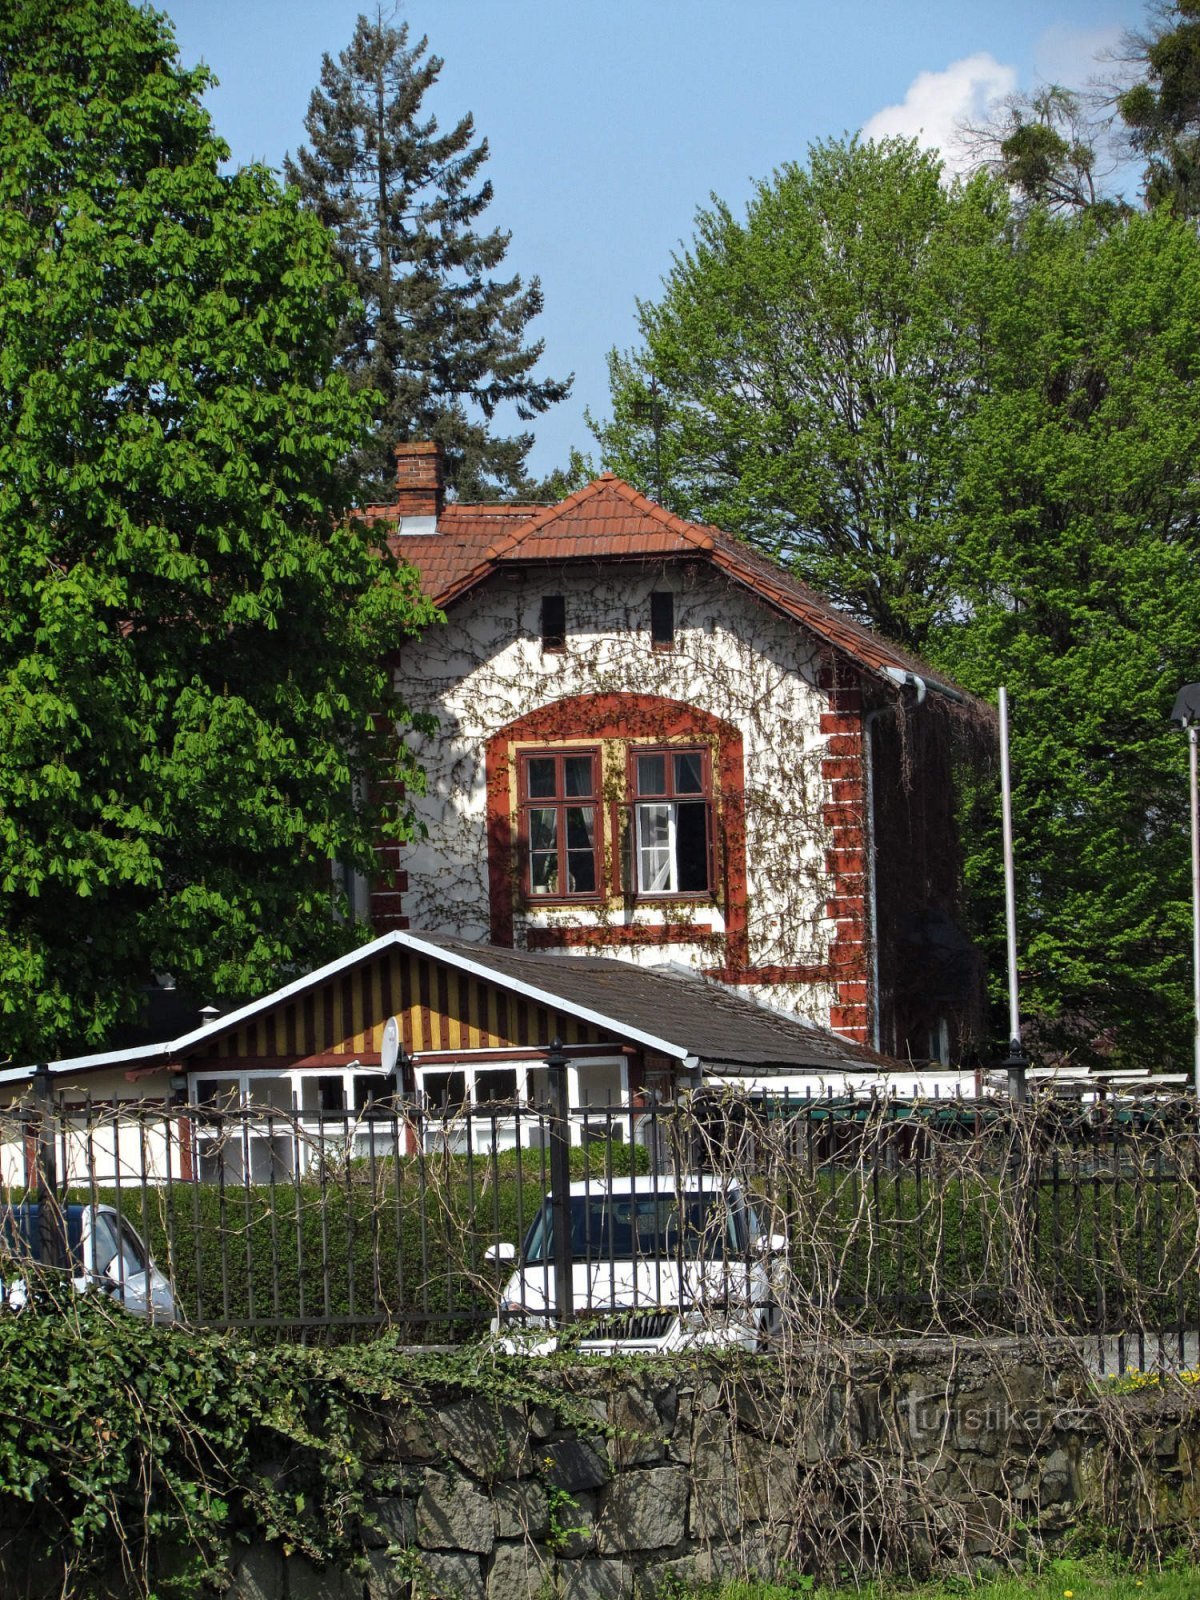 Teren Teatru Hranic i restauracji Stará Strelnice